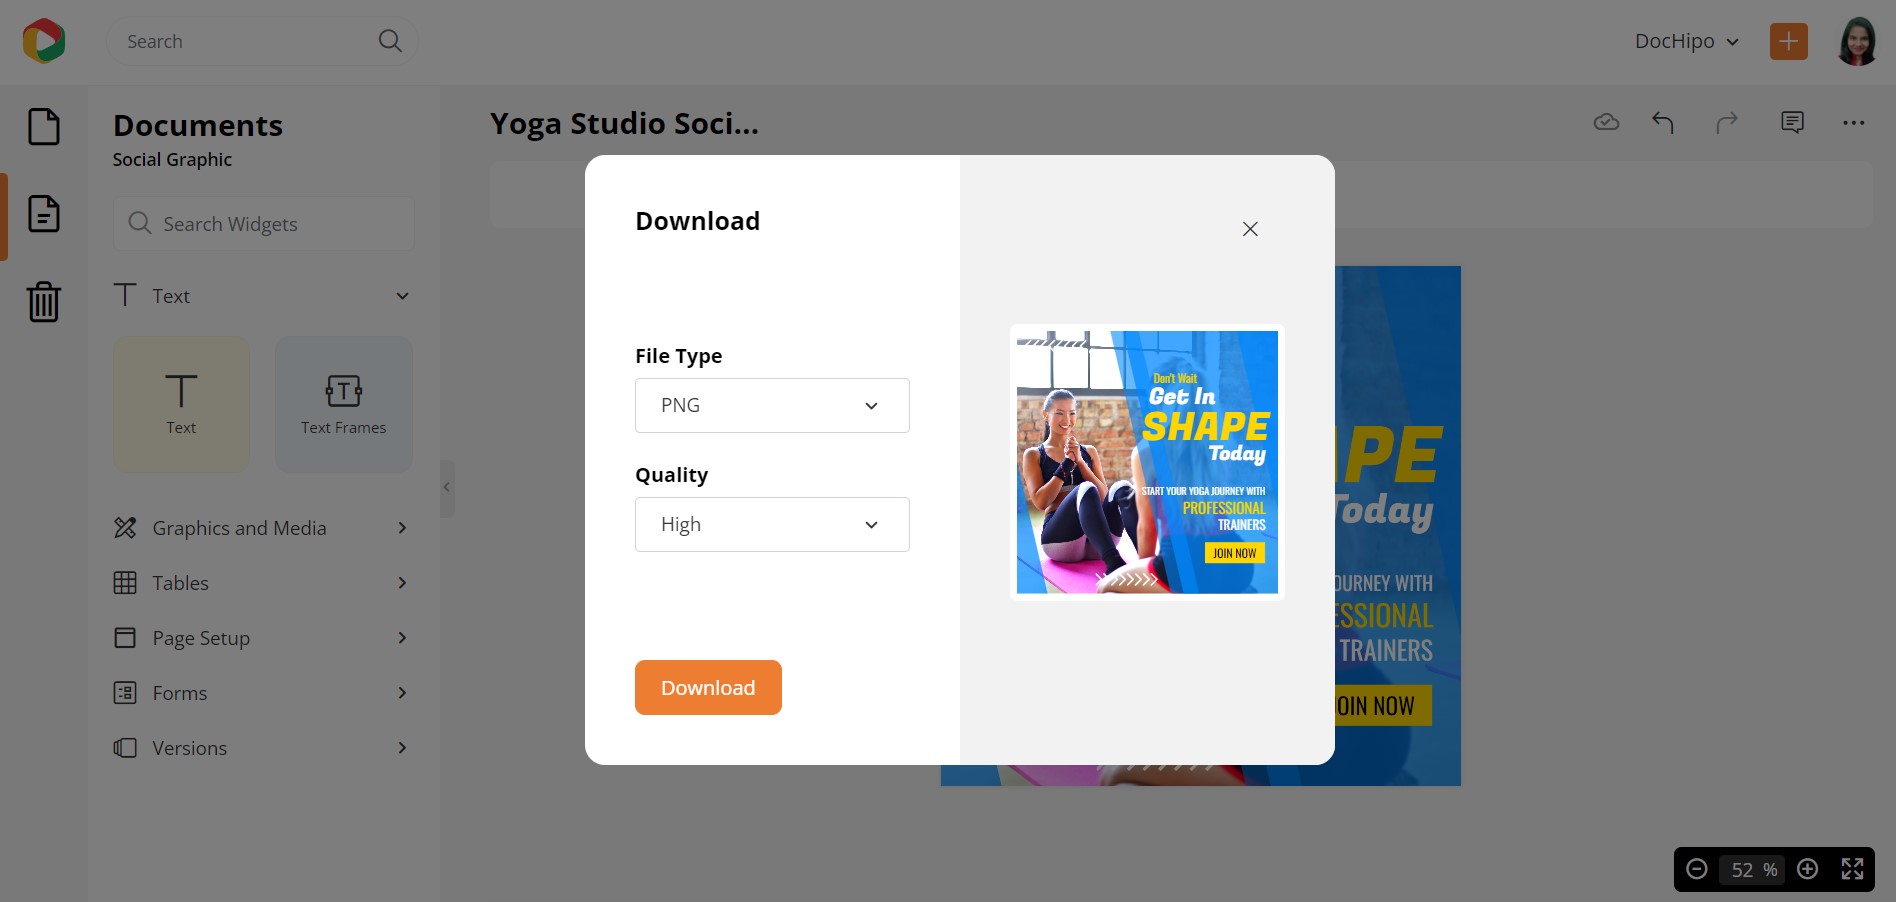 Download Yoga Studio Social Media Marketing Design in High Quality PNG File